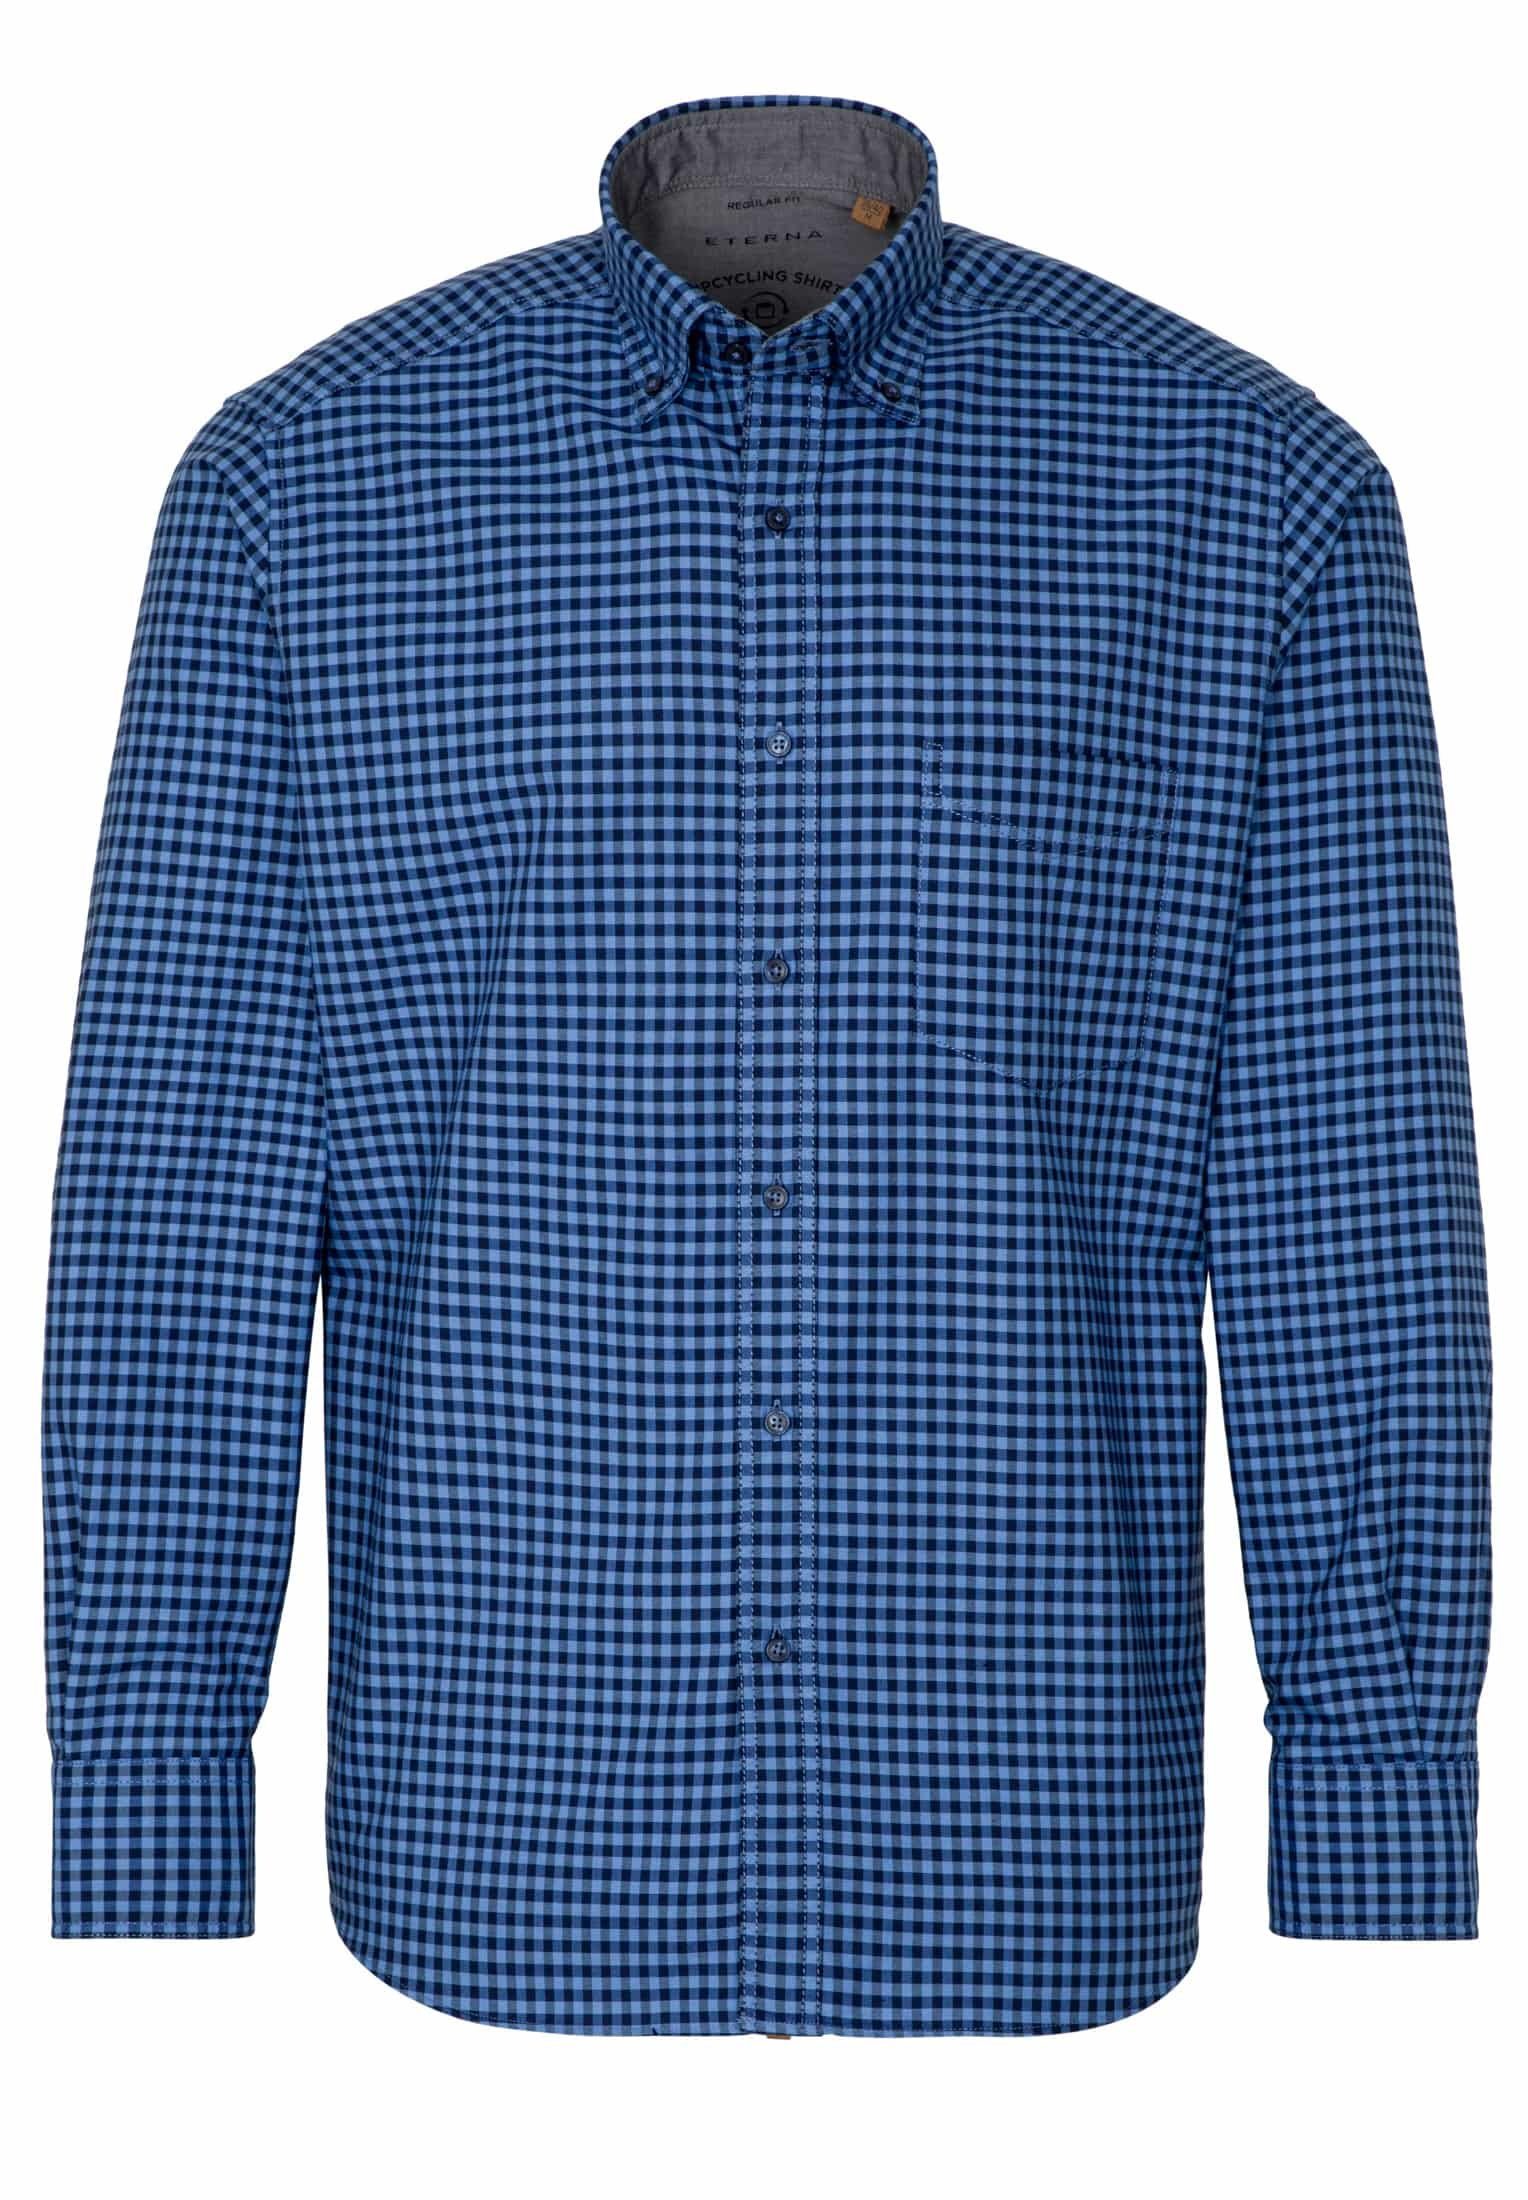 Eterna Klassische Bluse ETERNA REGULAR FIT UPCYCLING Langarm Hemd blau kariert 2478-08-VS5B